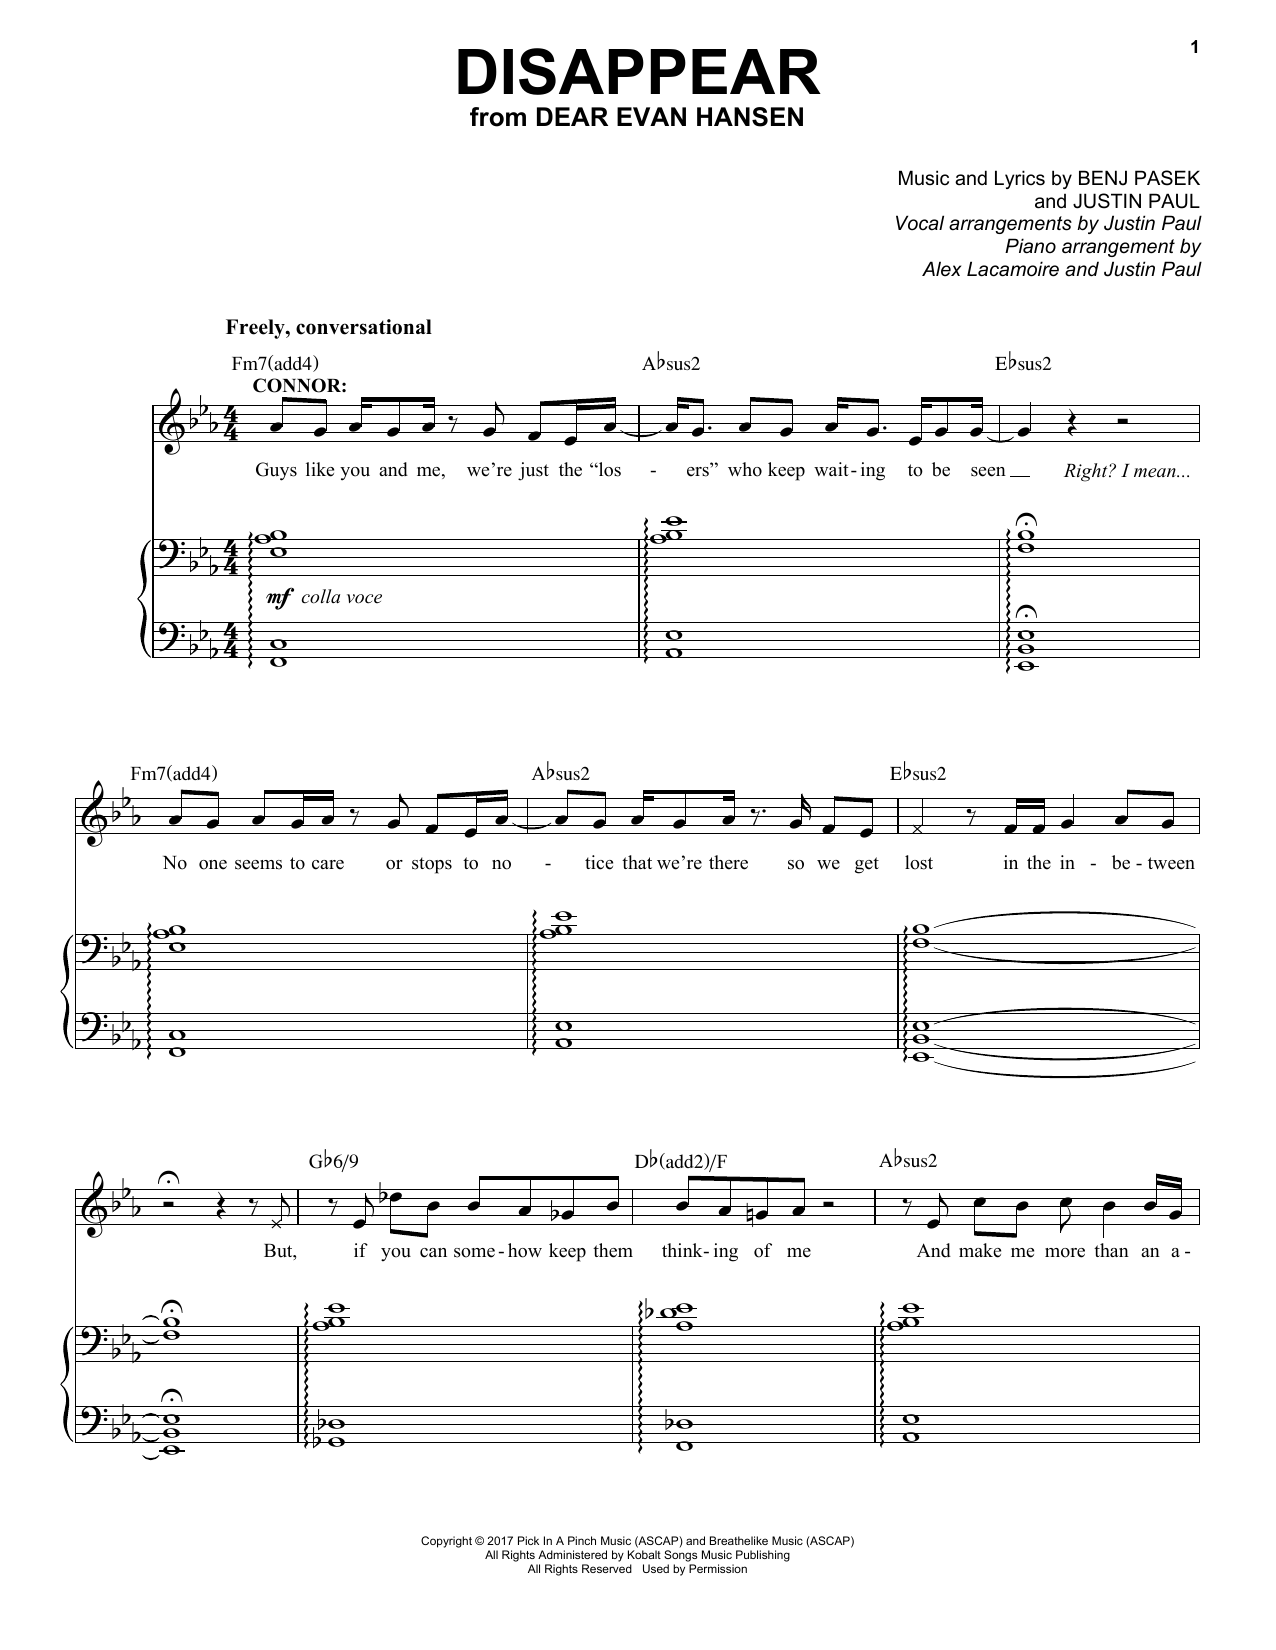 Pasek & Paul Disappear (from Dear Evan Hansen) sheet music notes and chords arranged for Guitar Chords/Lyrics